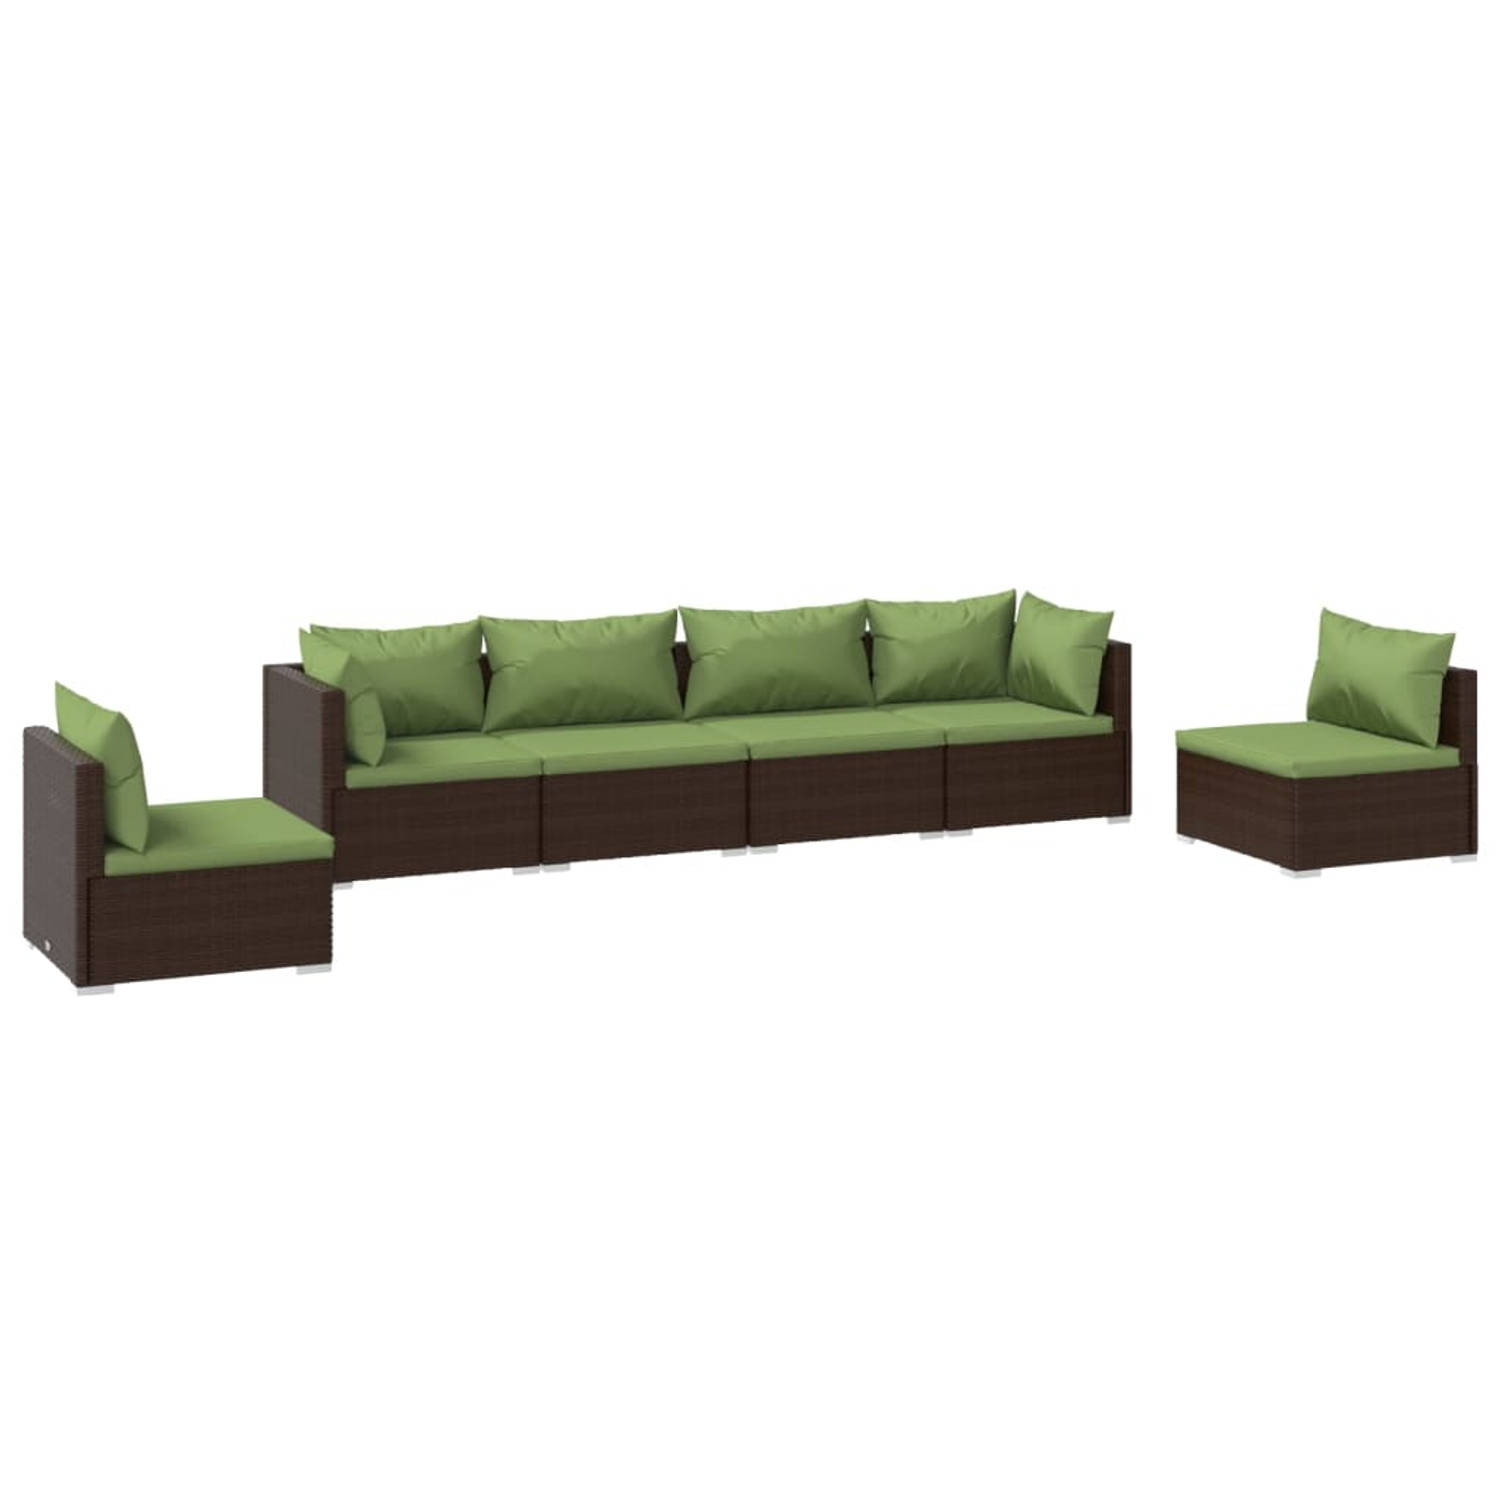 The Living Store Loungeset - Bruin PE-rattan - Modulair design - Stevig frame - Hoogwaardig materiaal - Toegevoegd zitcomfort